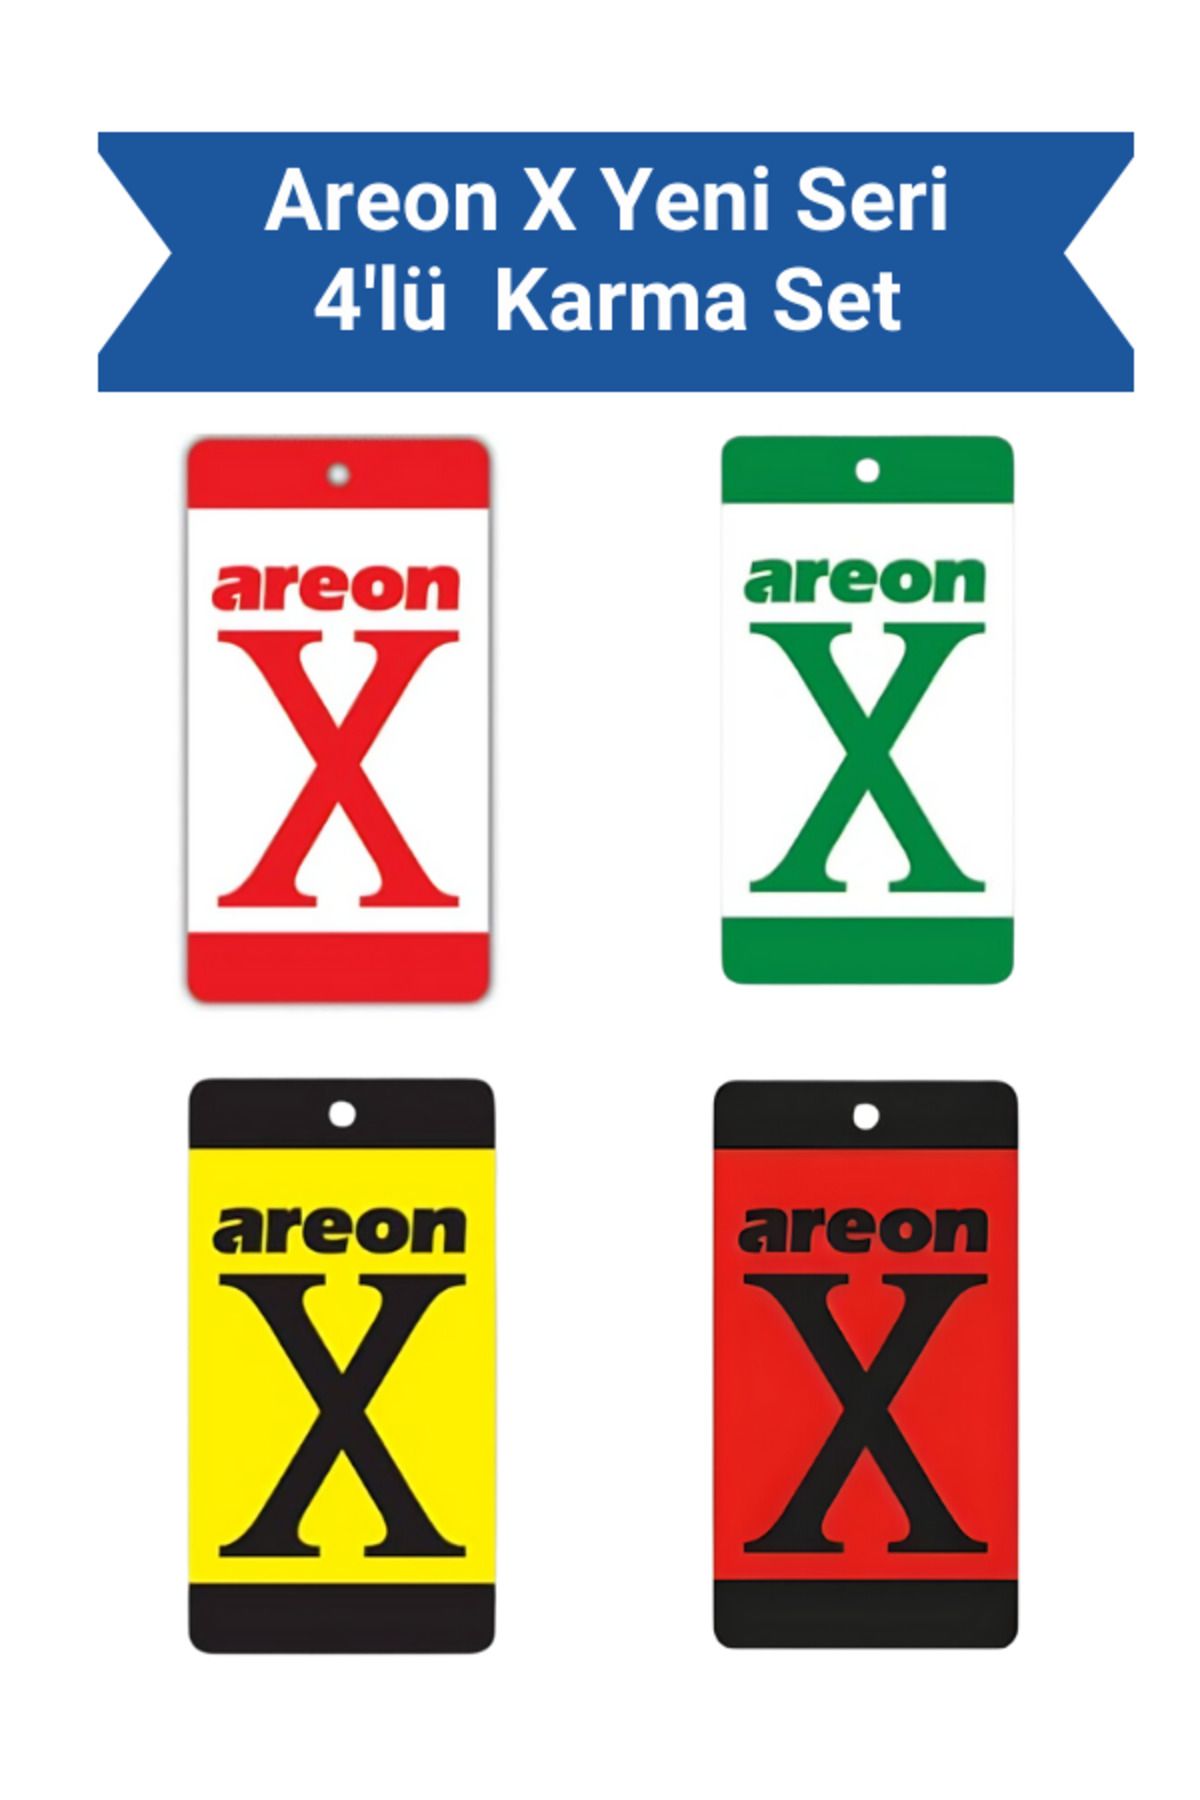 Areon X Yeni Seri 4'lü Karma Set